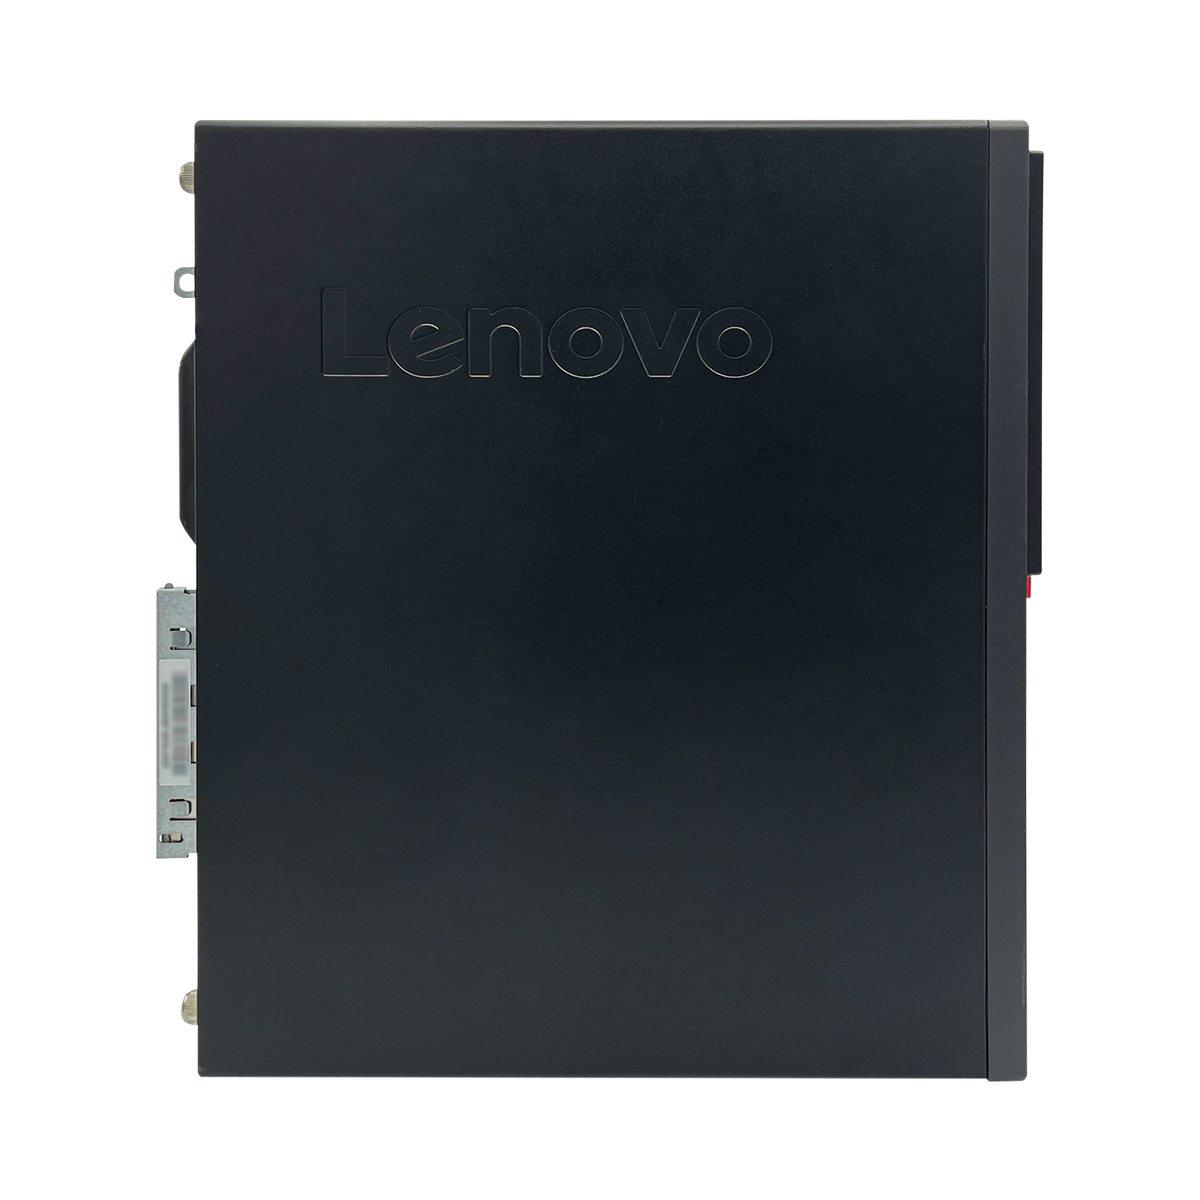 Lenovo M920S - Office PC